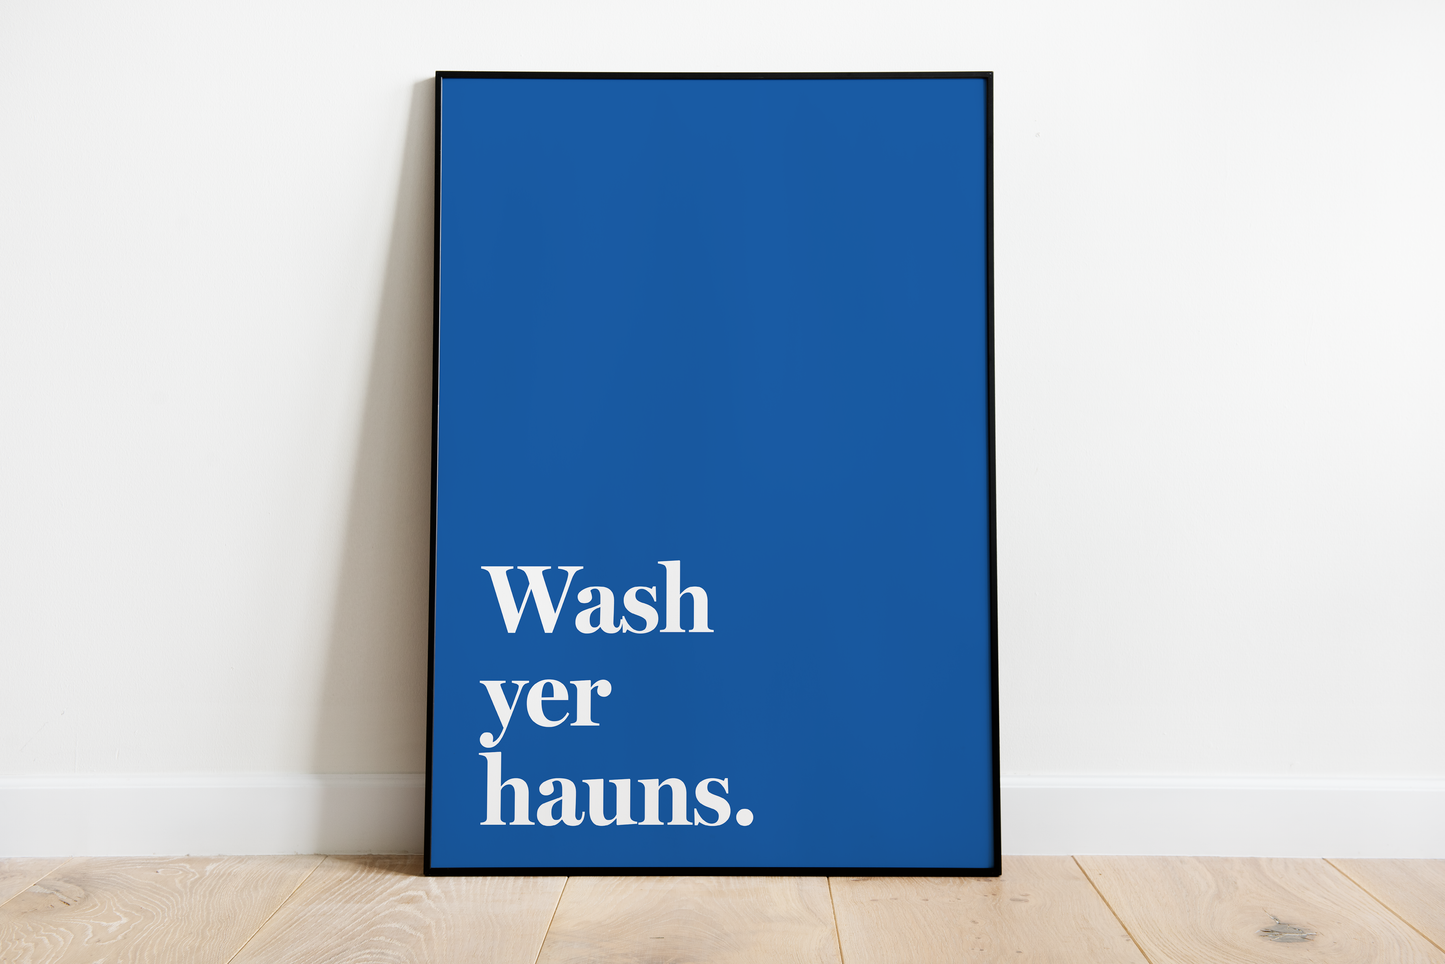 "Wash yer hauns" (Colourful)